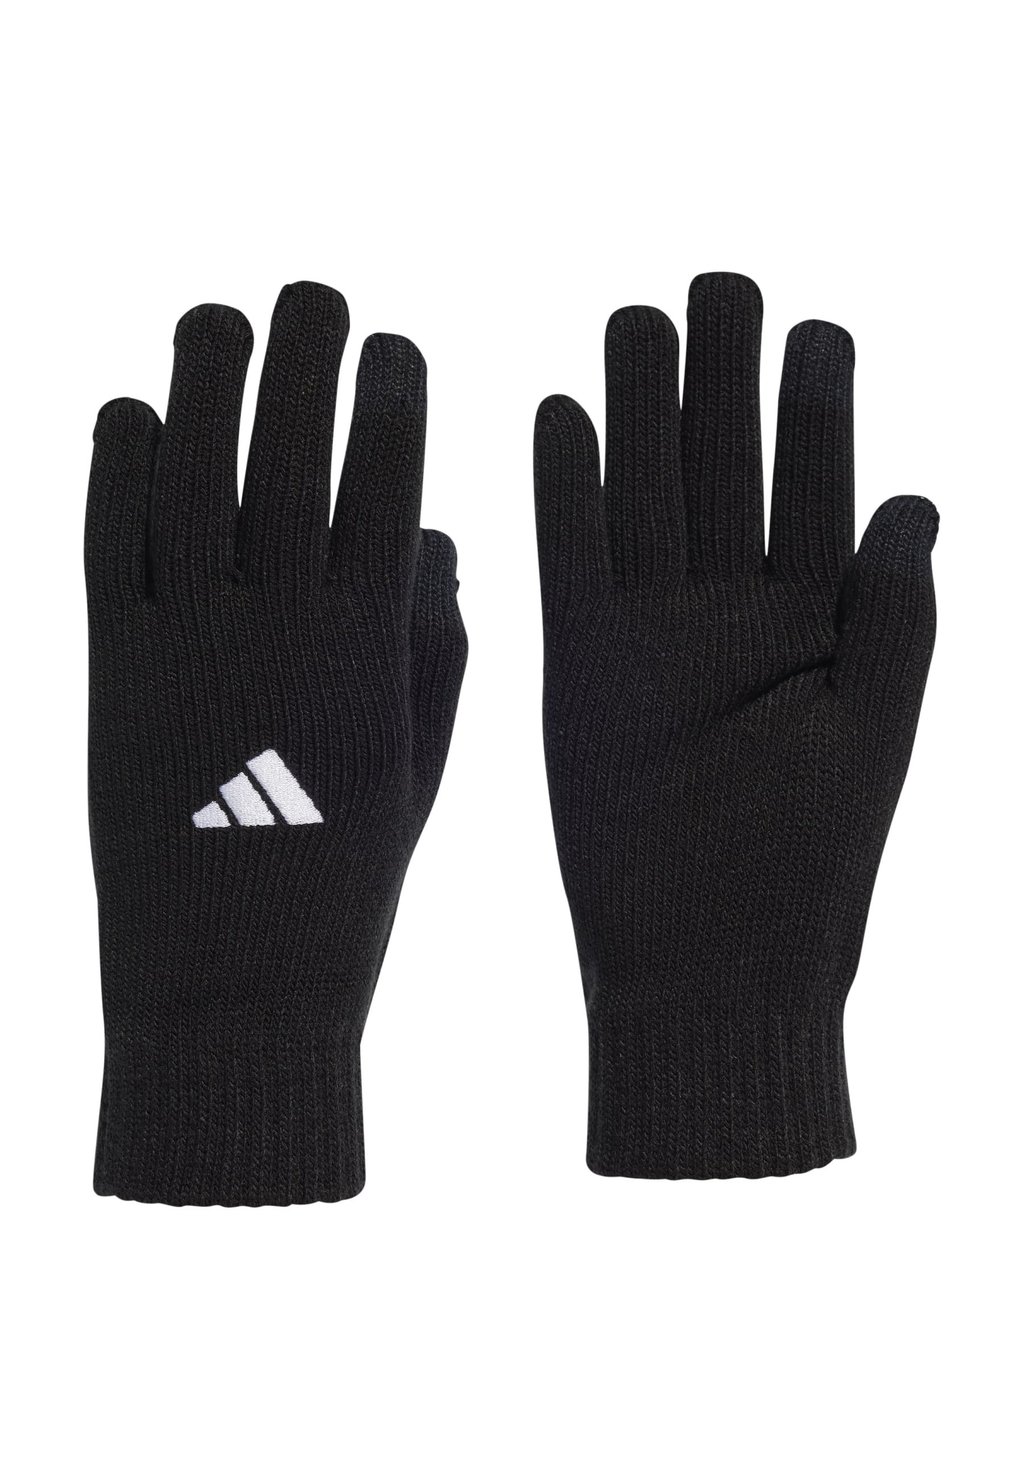 Перчатки вратарские TIRO L Adidas, черный/белый перчатки вратарские adidas детские pred gl trn j синий